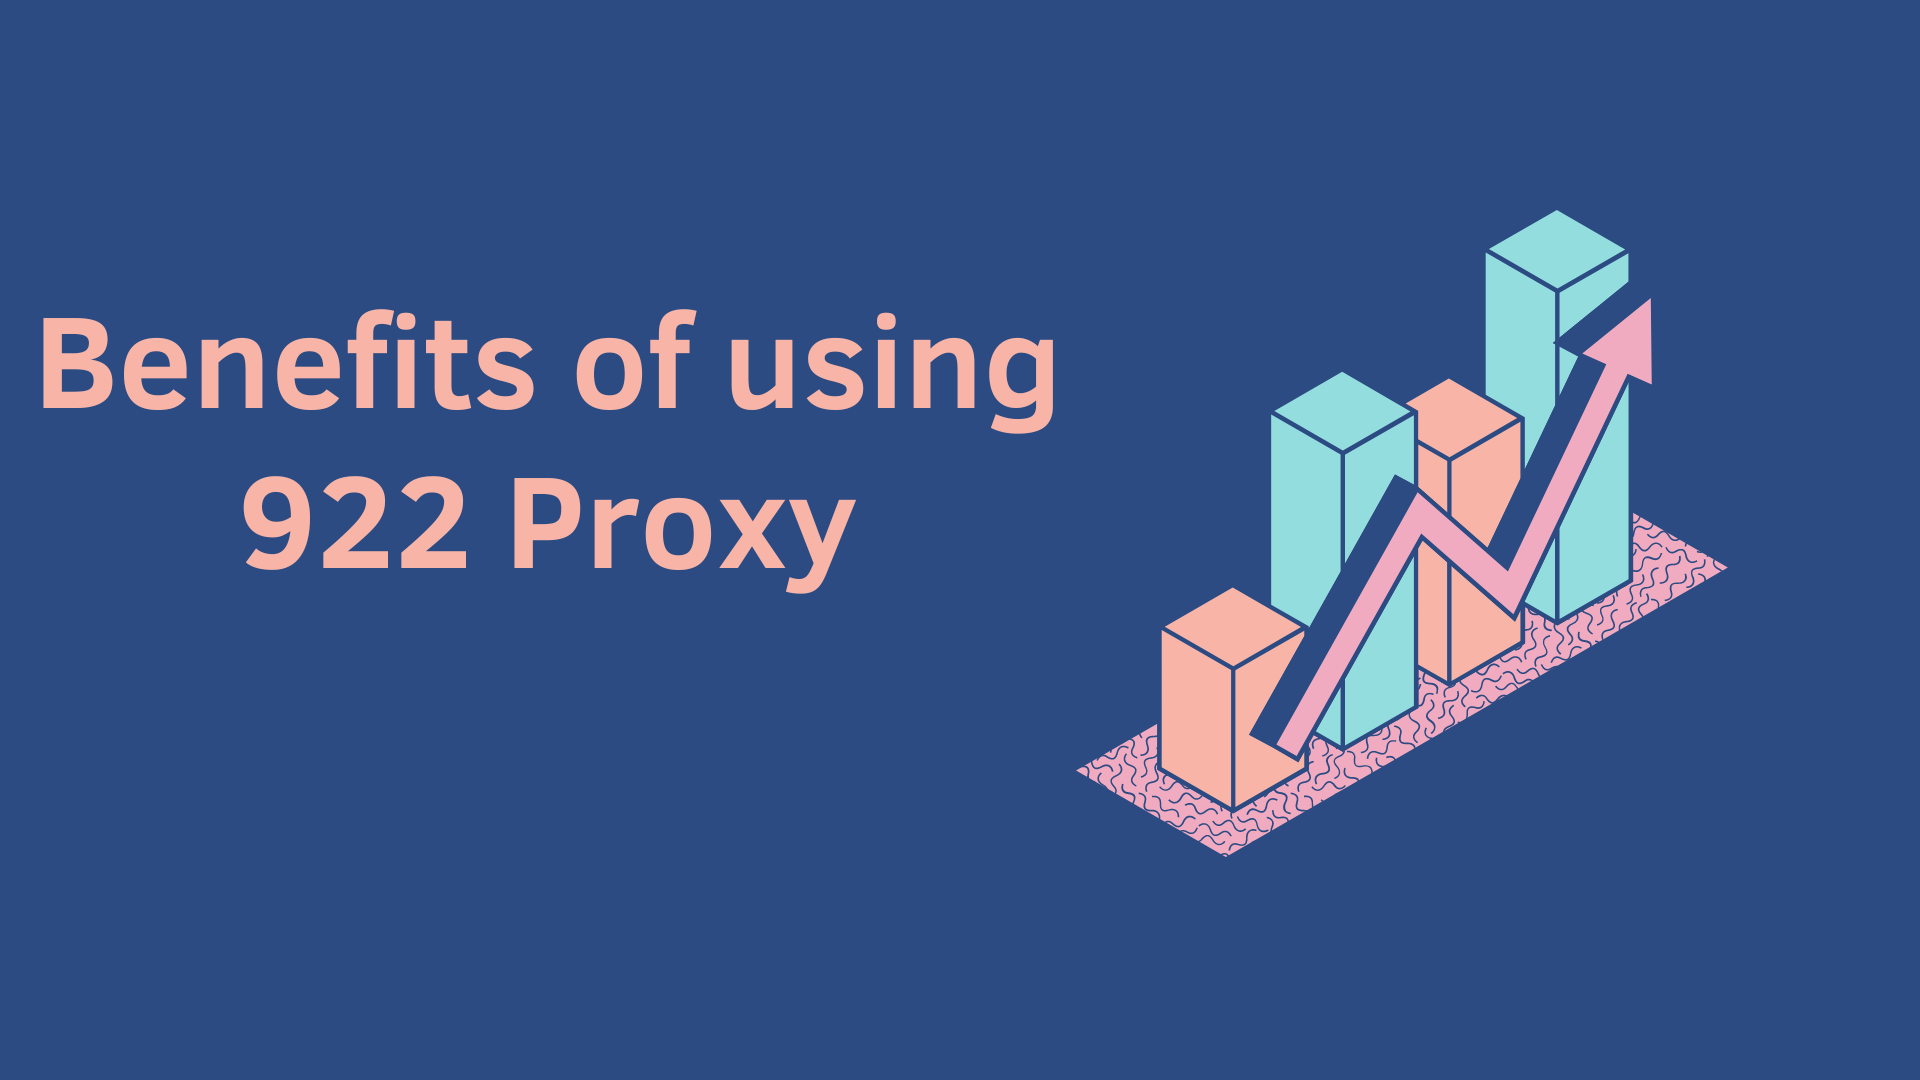 Benefits of using 922 Proxy